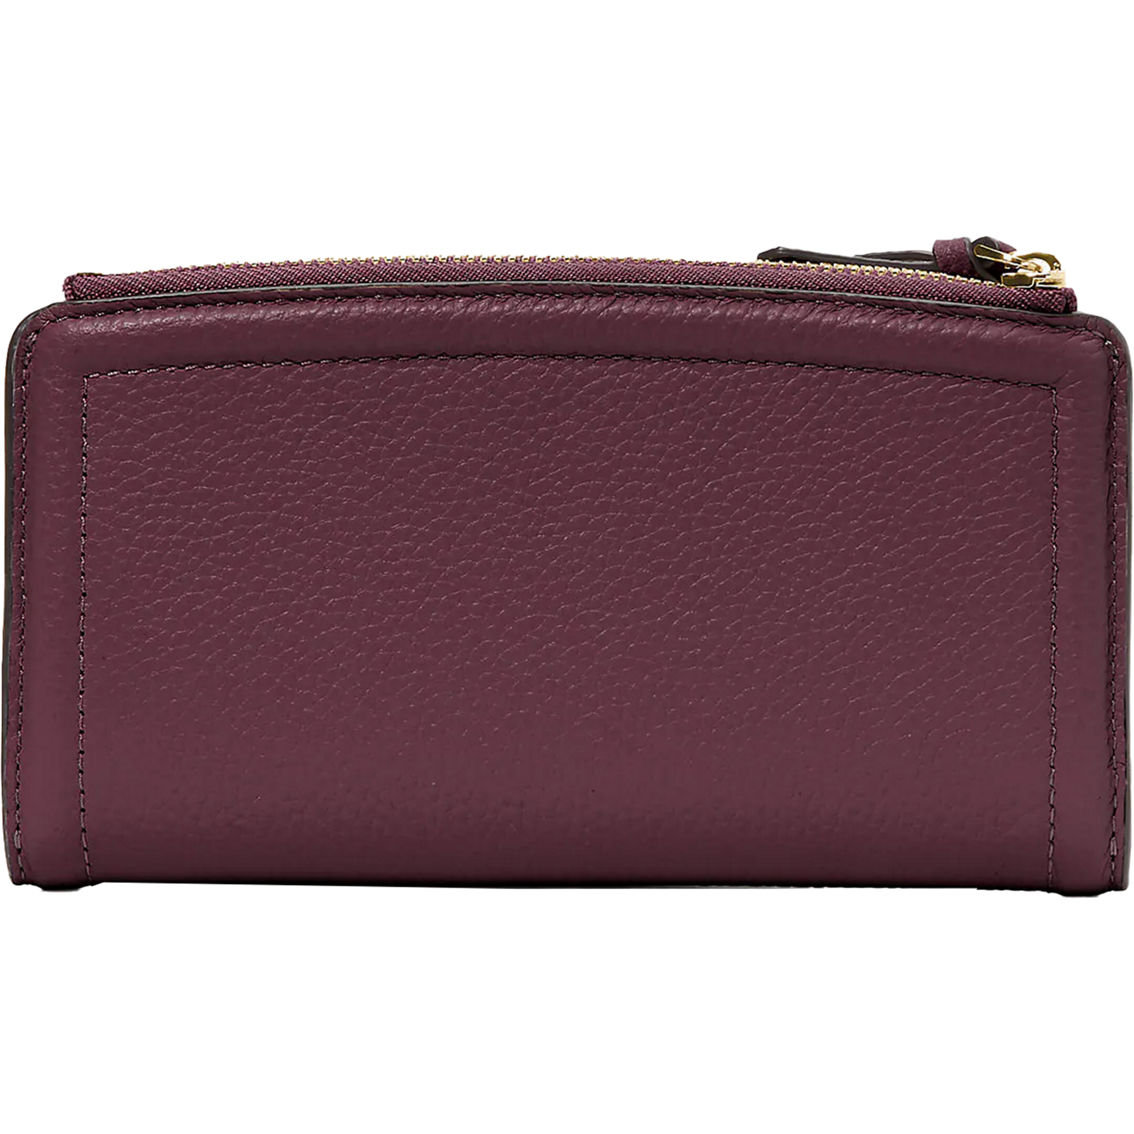 Kate Spade New York Knott Pebbled Leather Zip Slim Wallet - Image 2 of 4